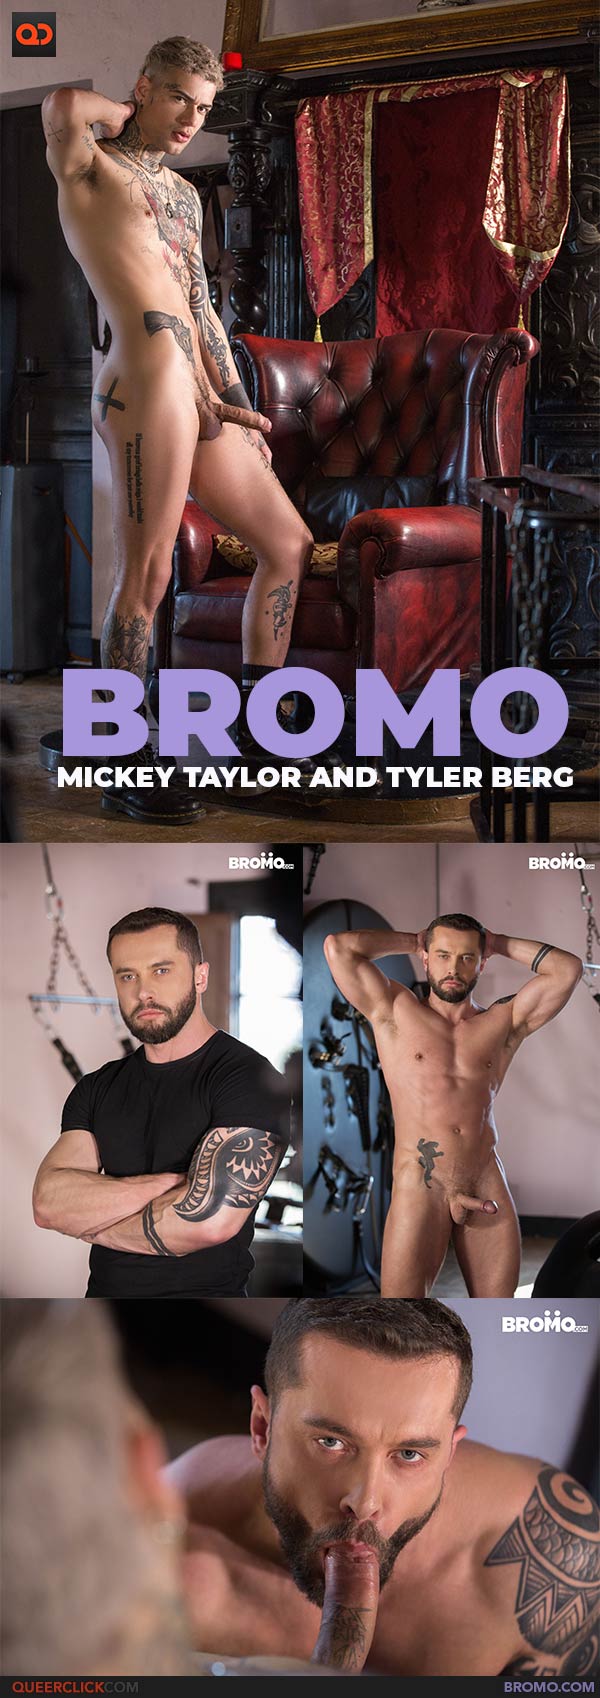 Bromo: Mickey Taylor and Tyler Berg